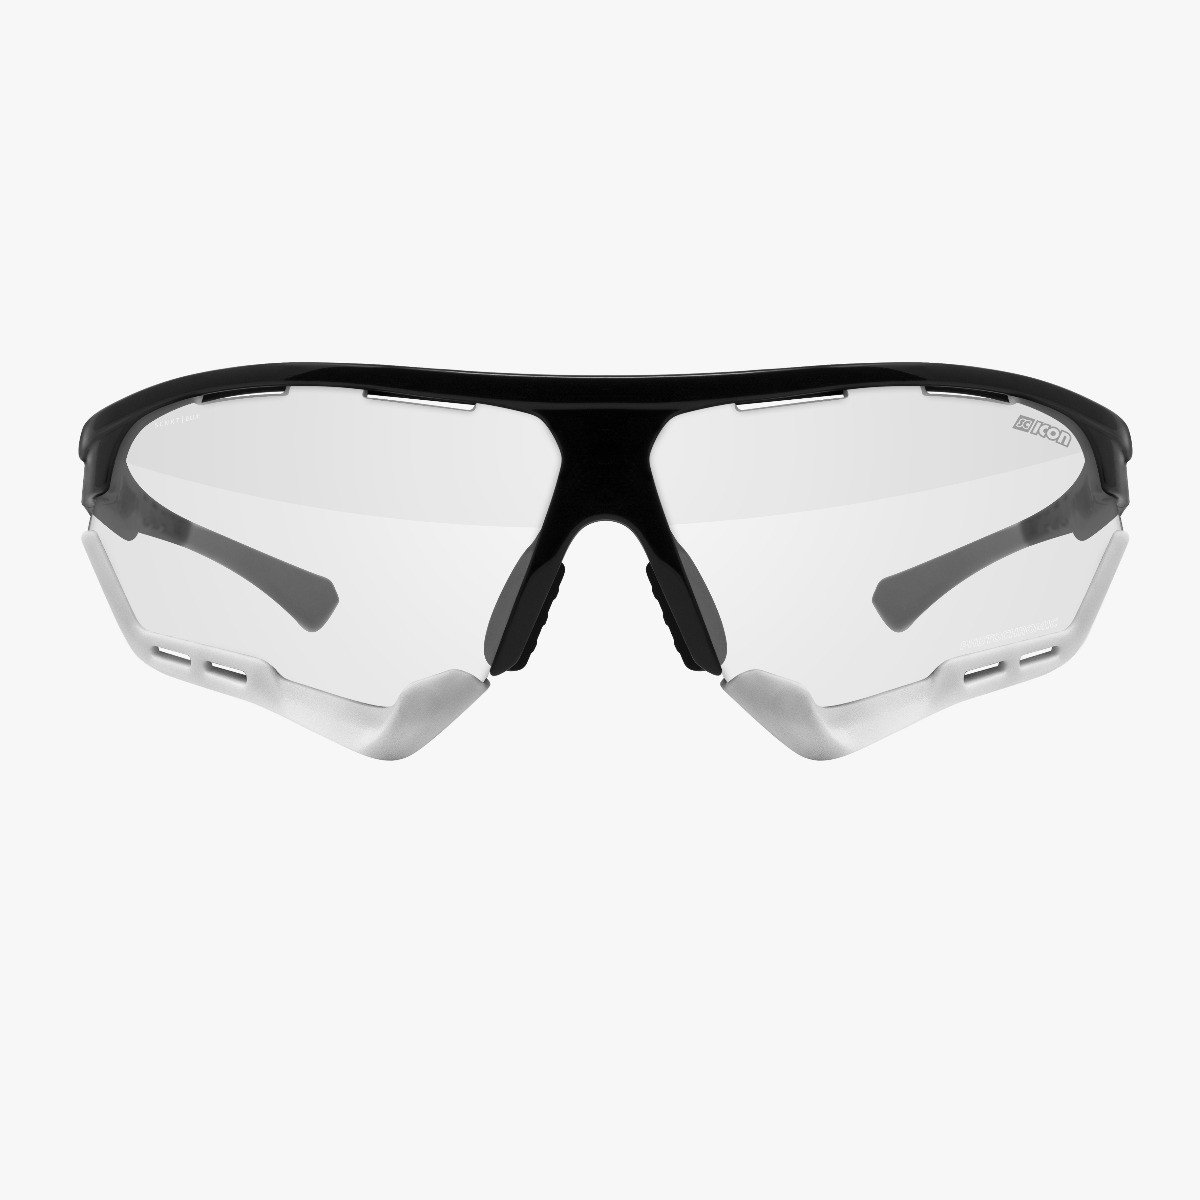 Scicon Sports | Aerocomfort Sport Cycling Performance Sunglasses - Black Gloss / Photocromatic Blue - EY15130202